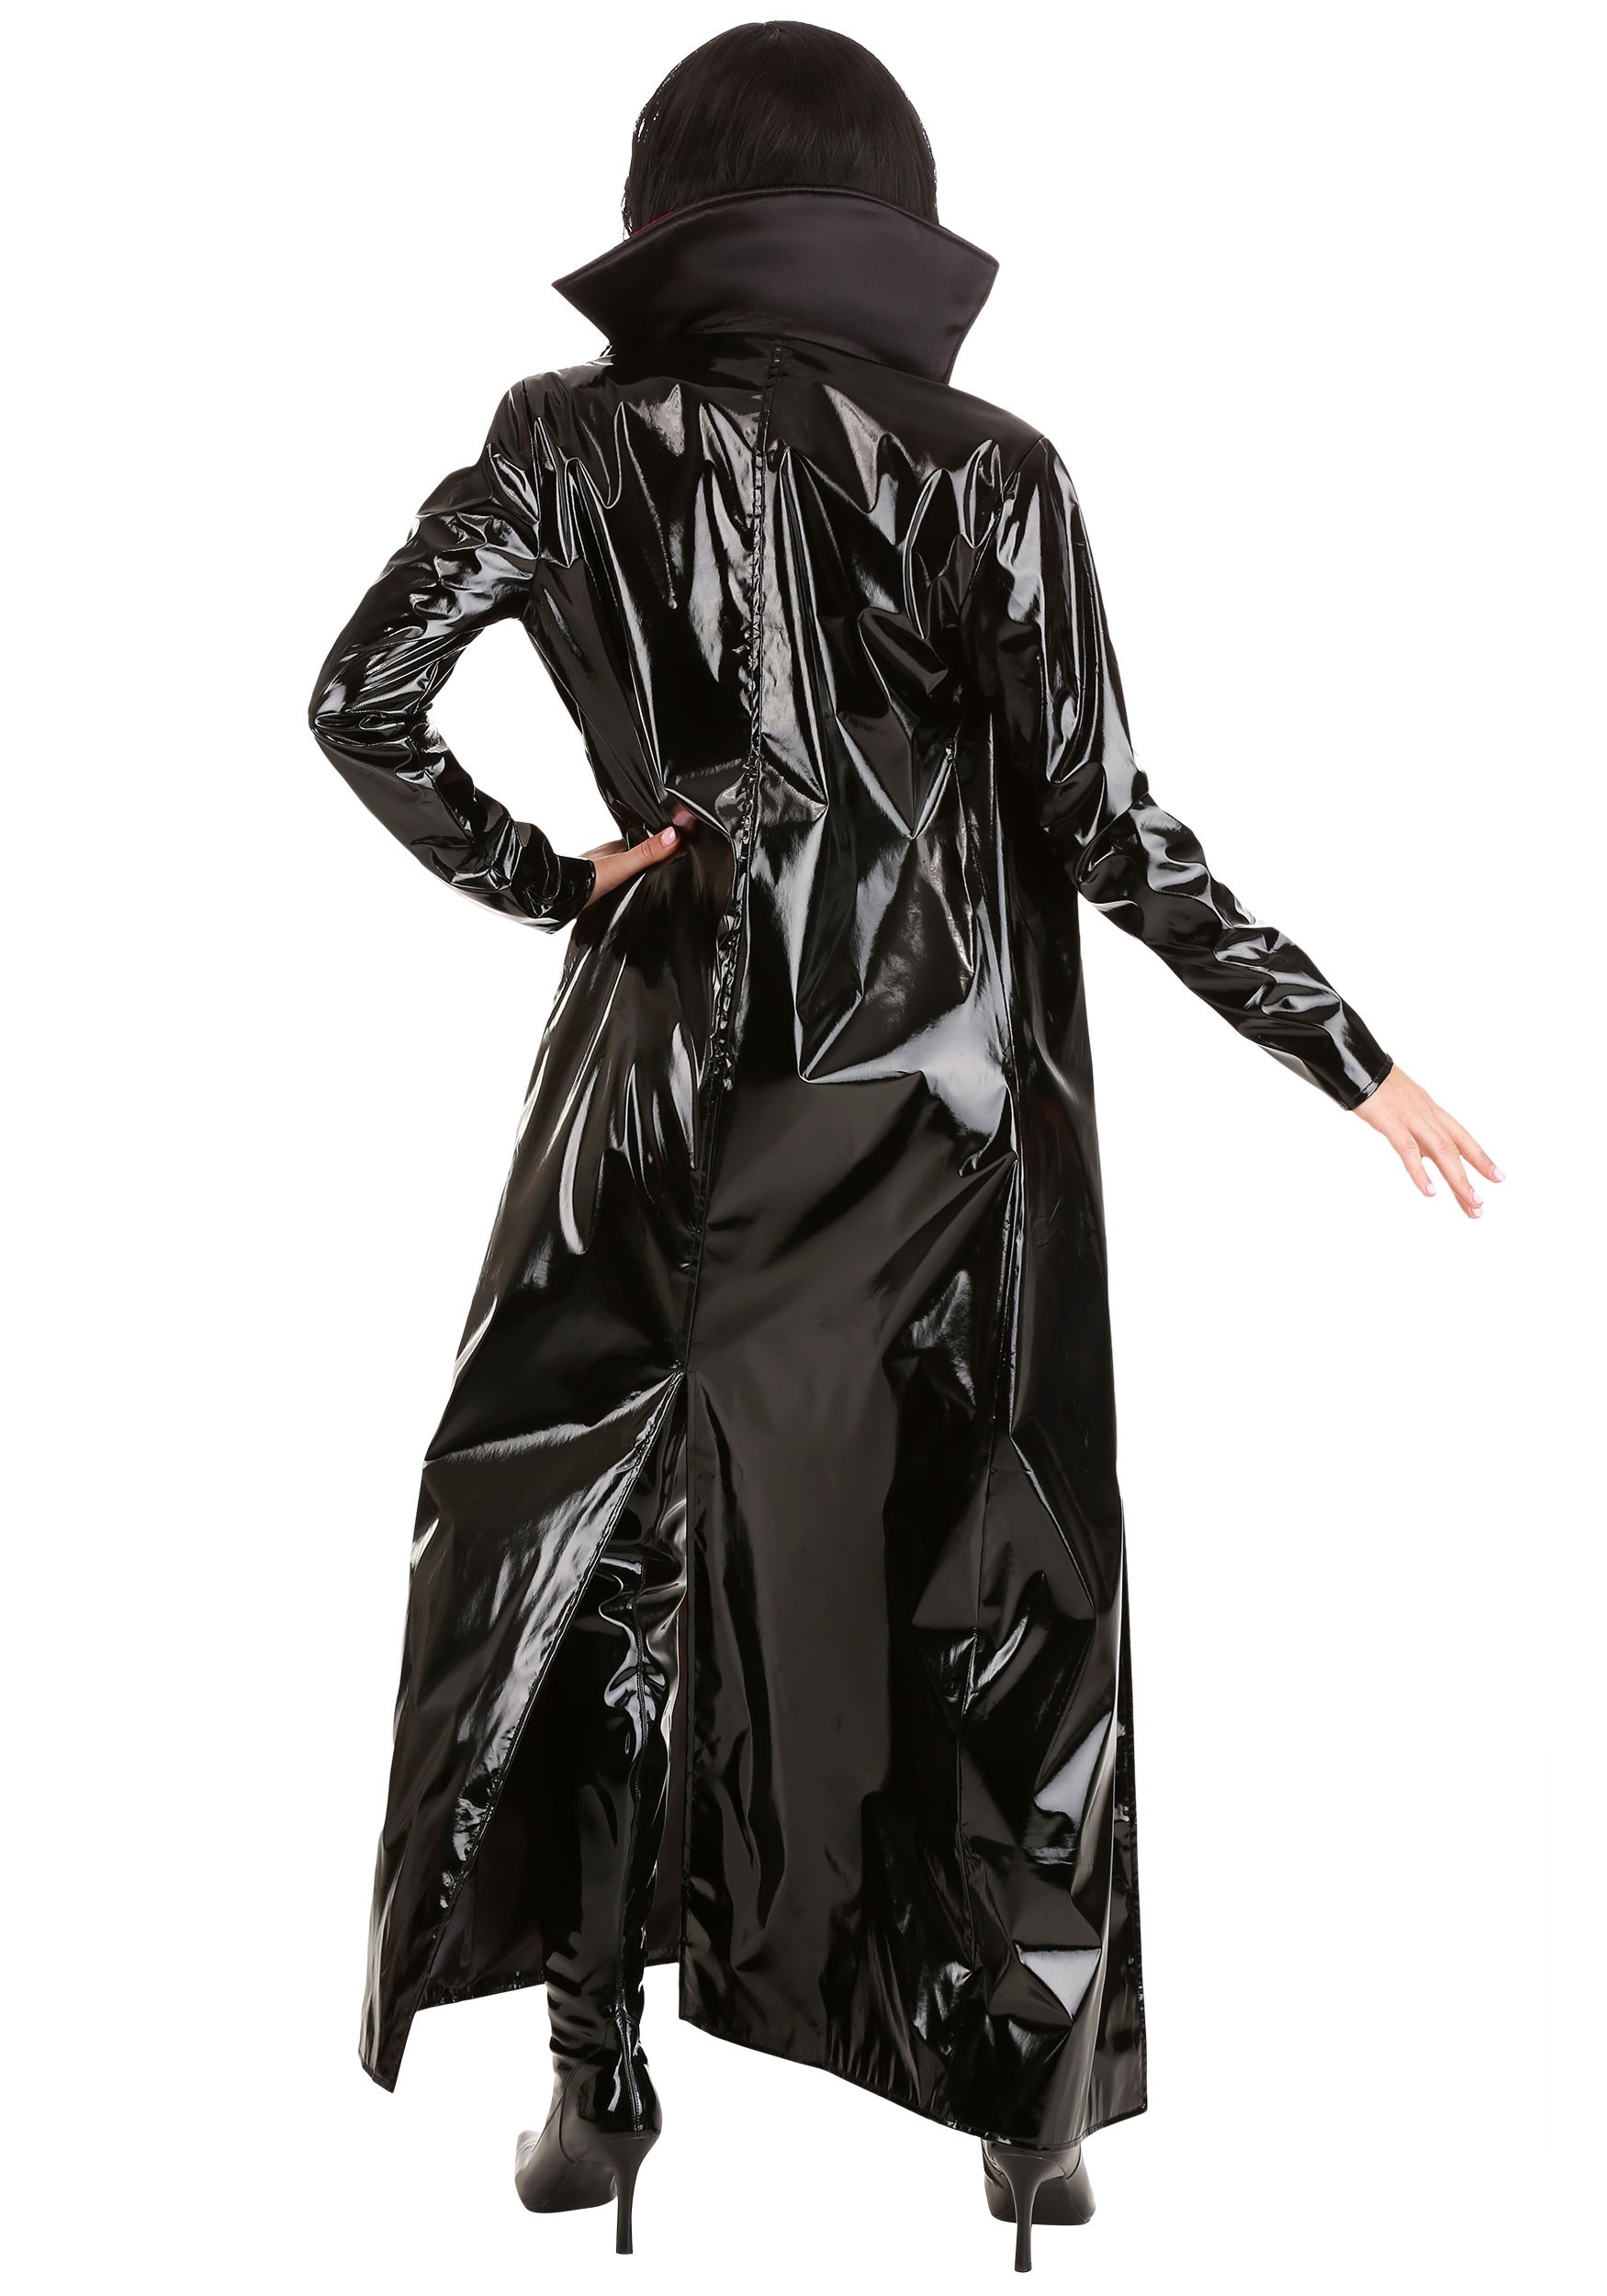 Goth Vampiress Costume For Women